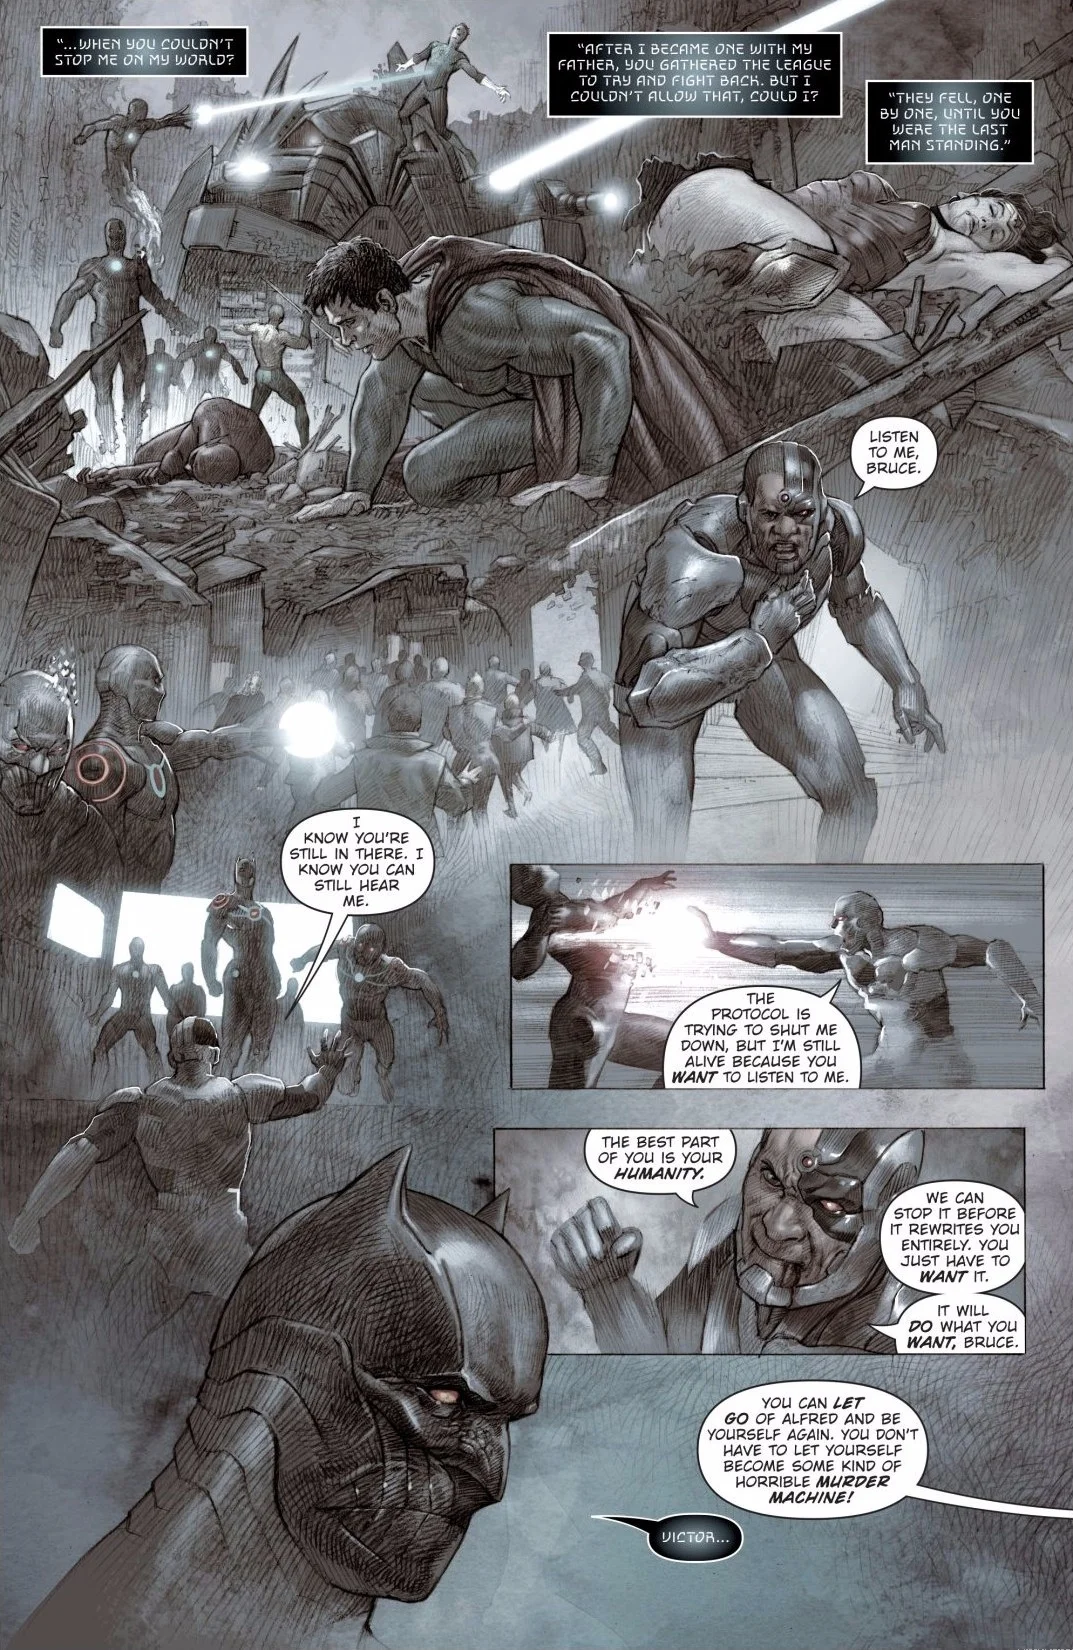 Как появился злой Бэтмен-Киборг из Dark Nights: Metal? - фото 3